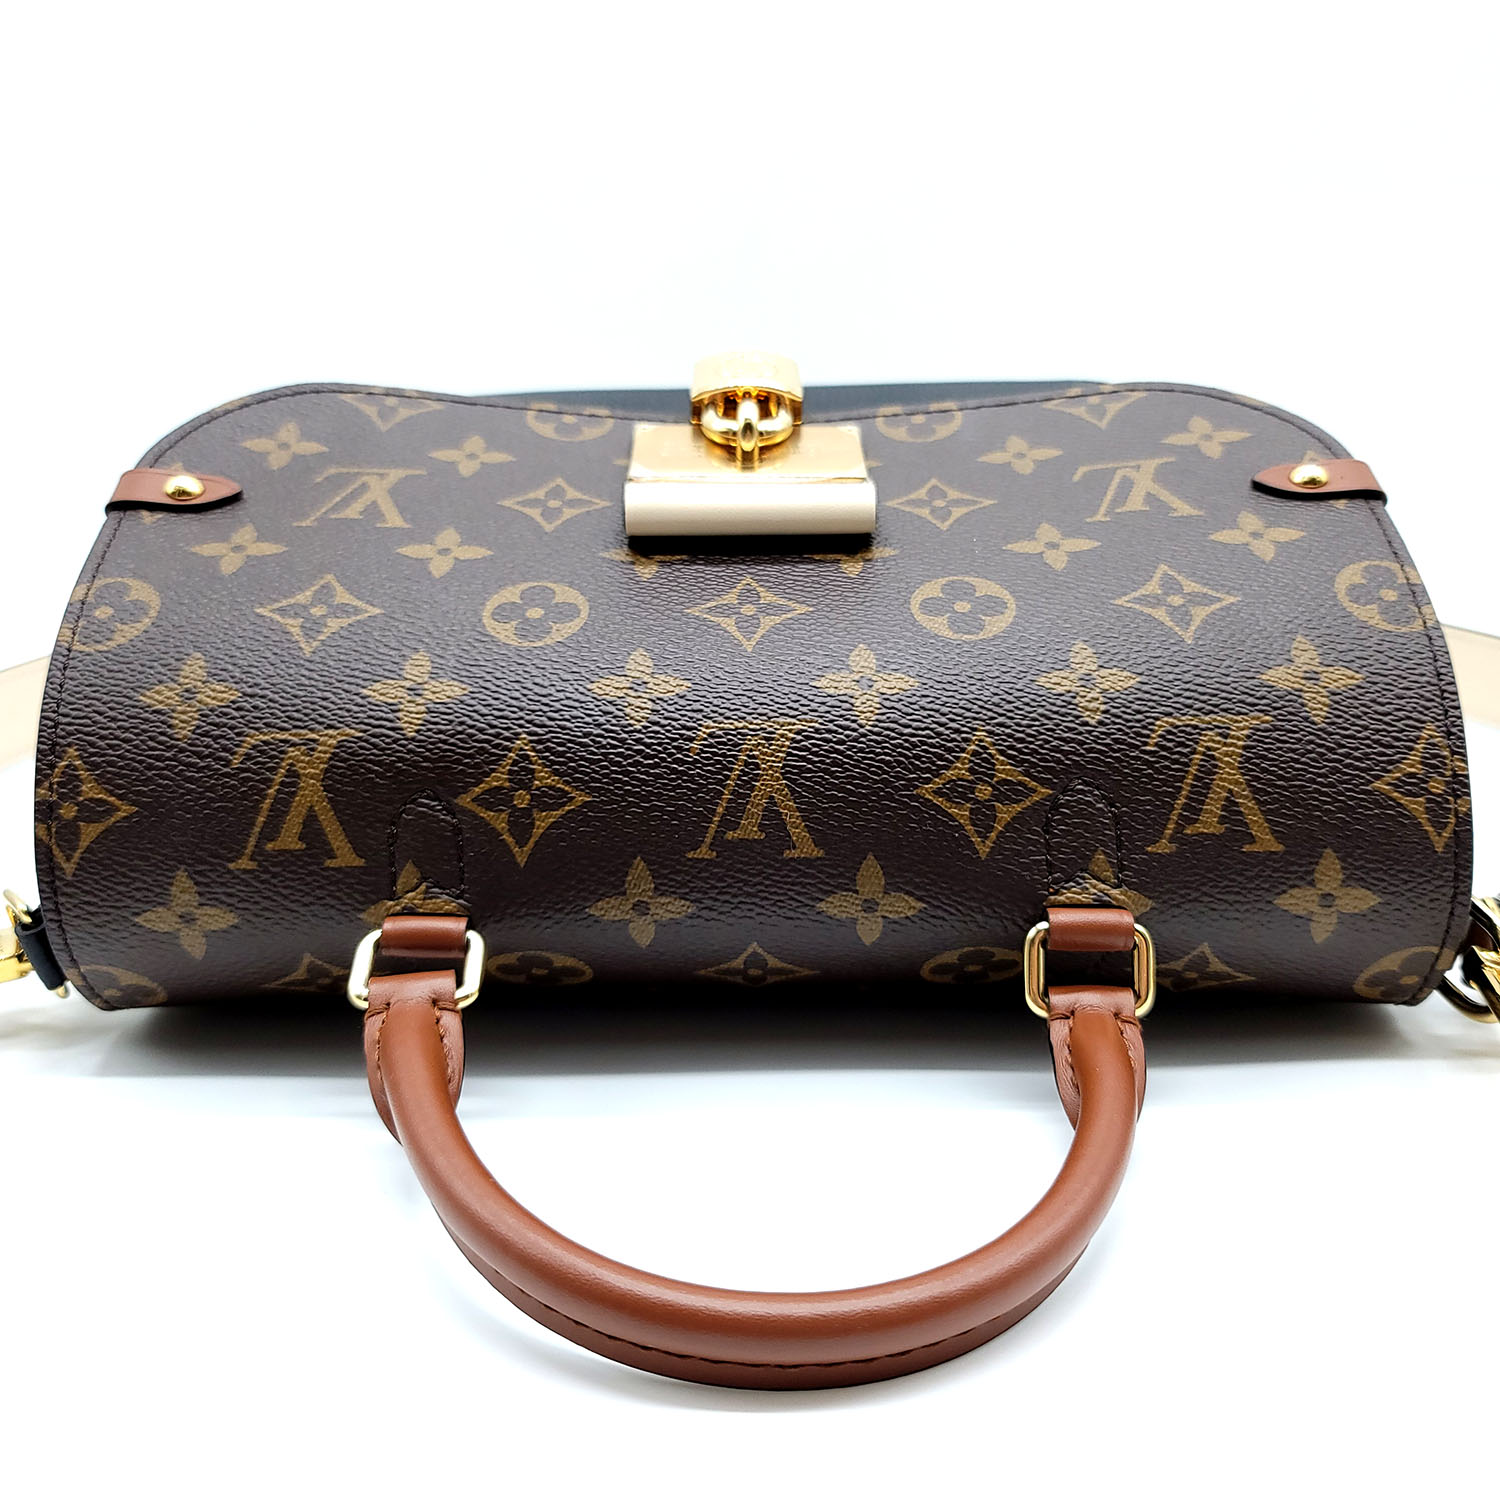 Louis Vuitton Authenticated Vaugirard Handbag